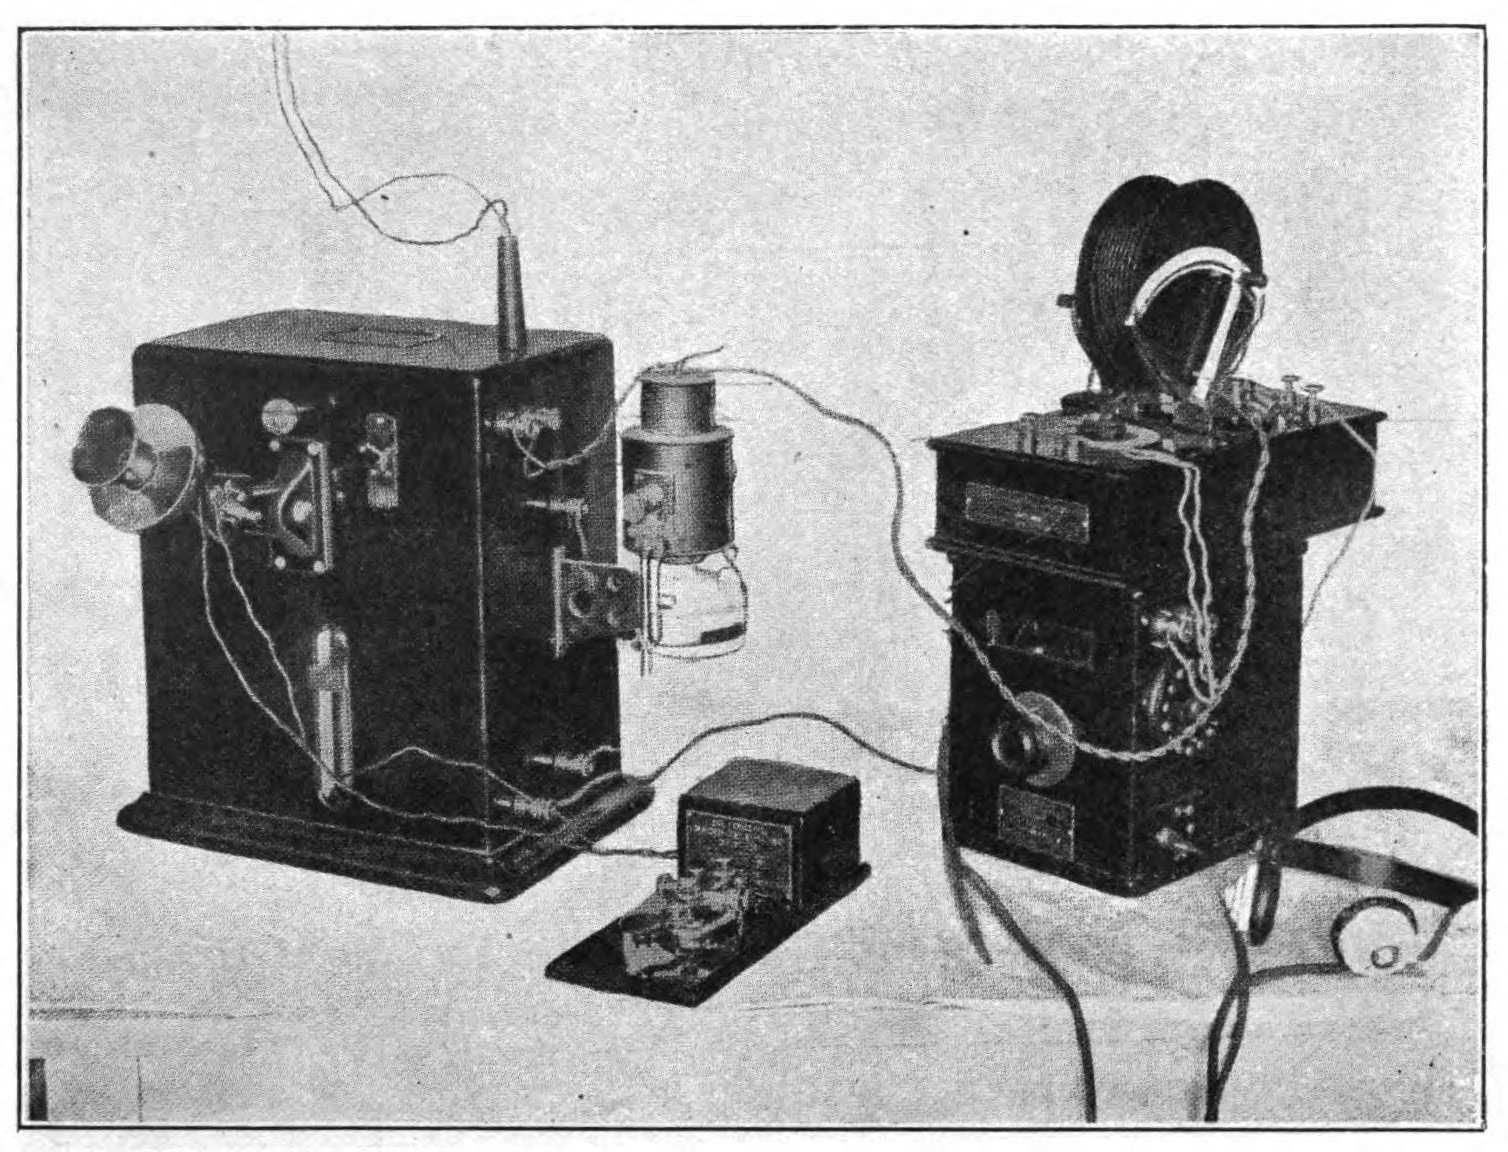 FIG. 140.—De Forest wireless telephone equipment.